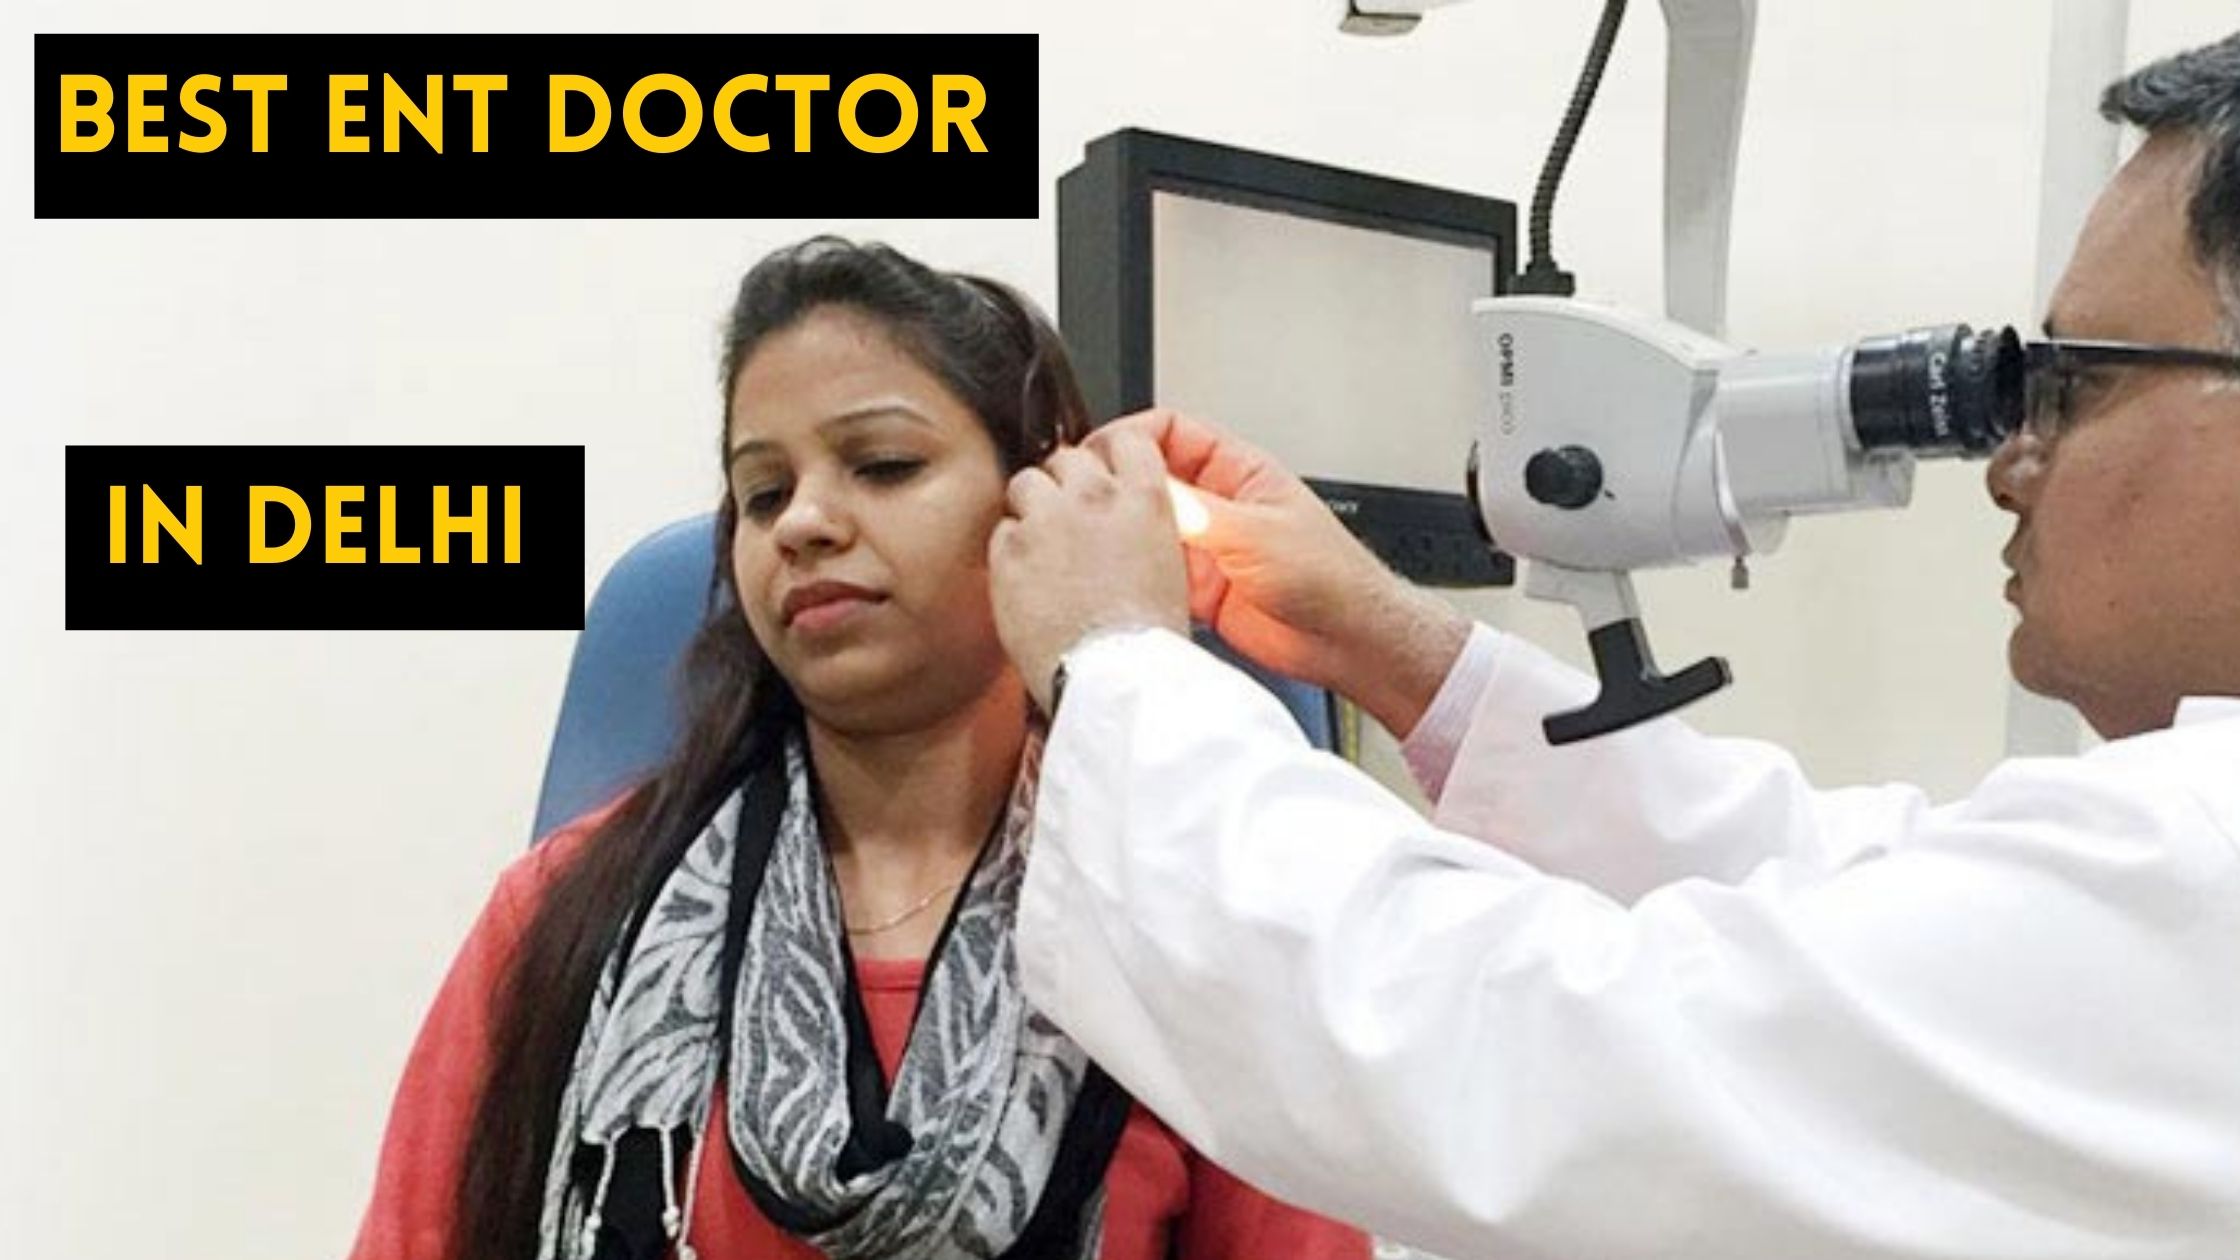 Best Ear Doctor Otologist in Delhi for Hearing Loss Treatment